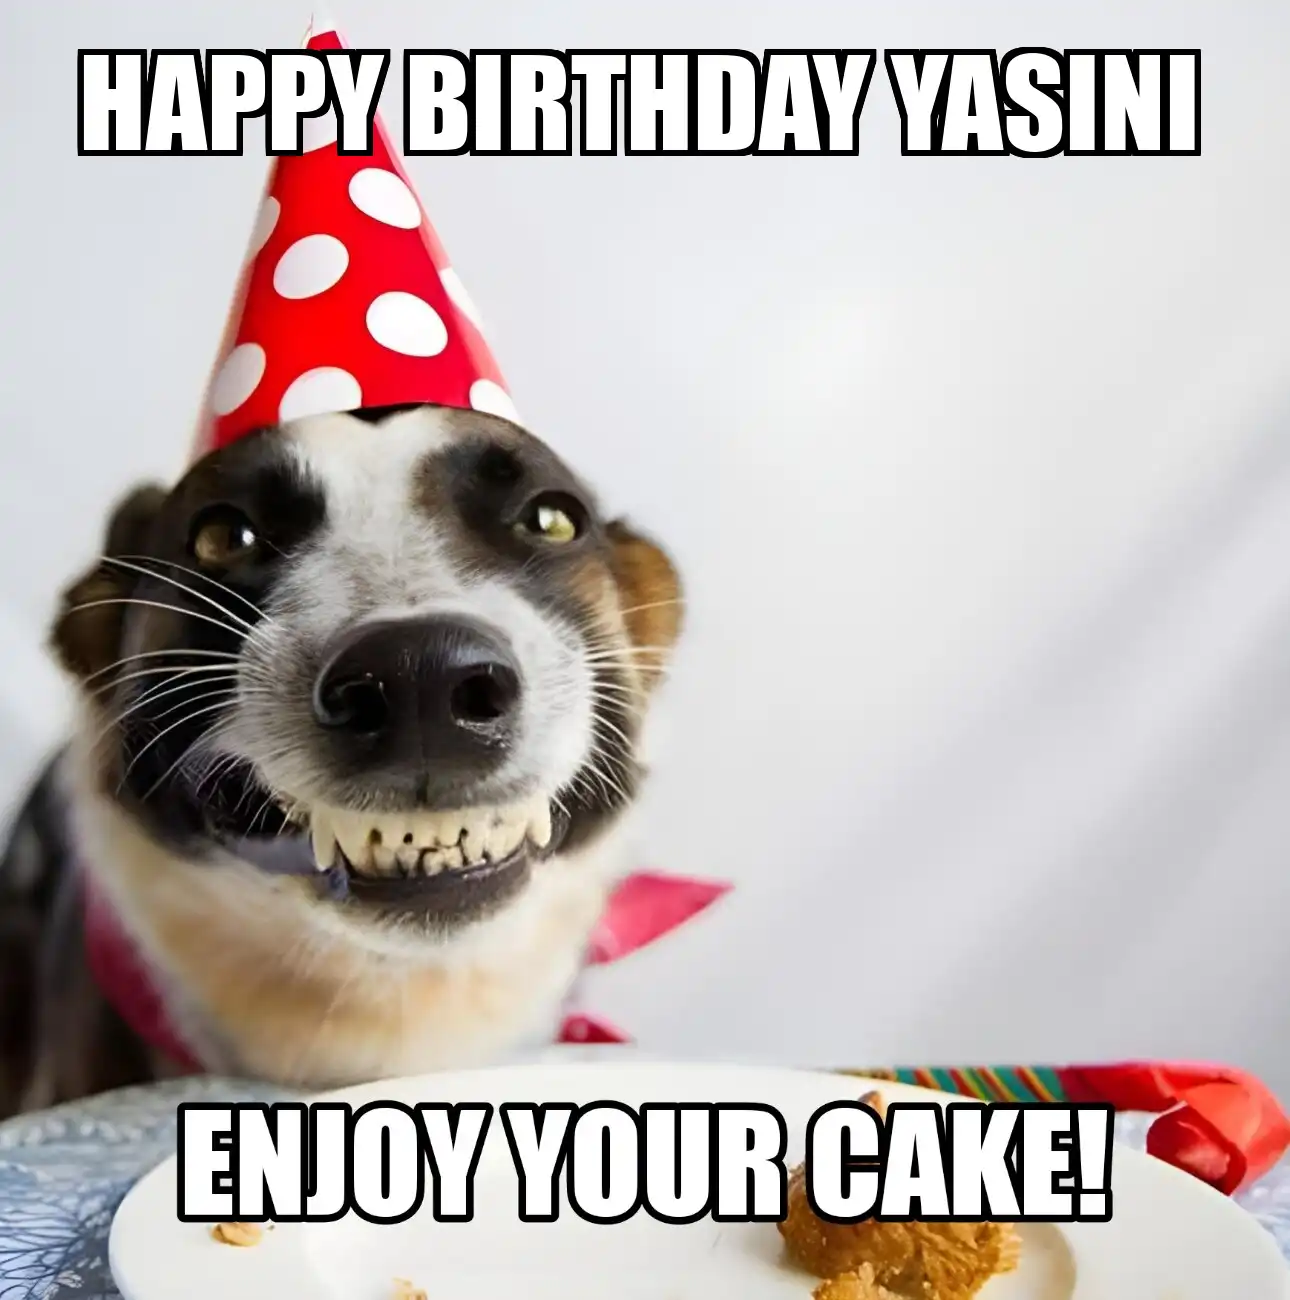 Happy Birthday Yasini Enjoy Your Cake Dog Meme